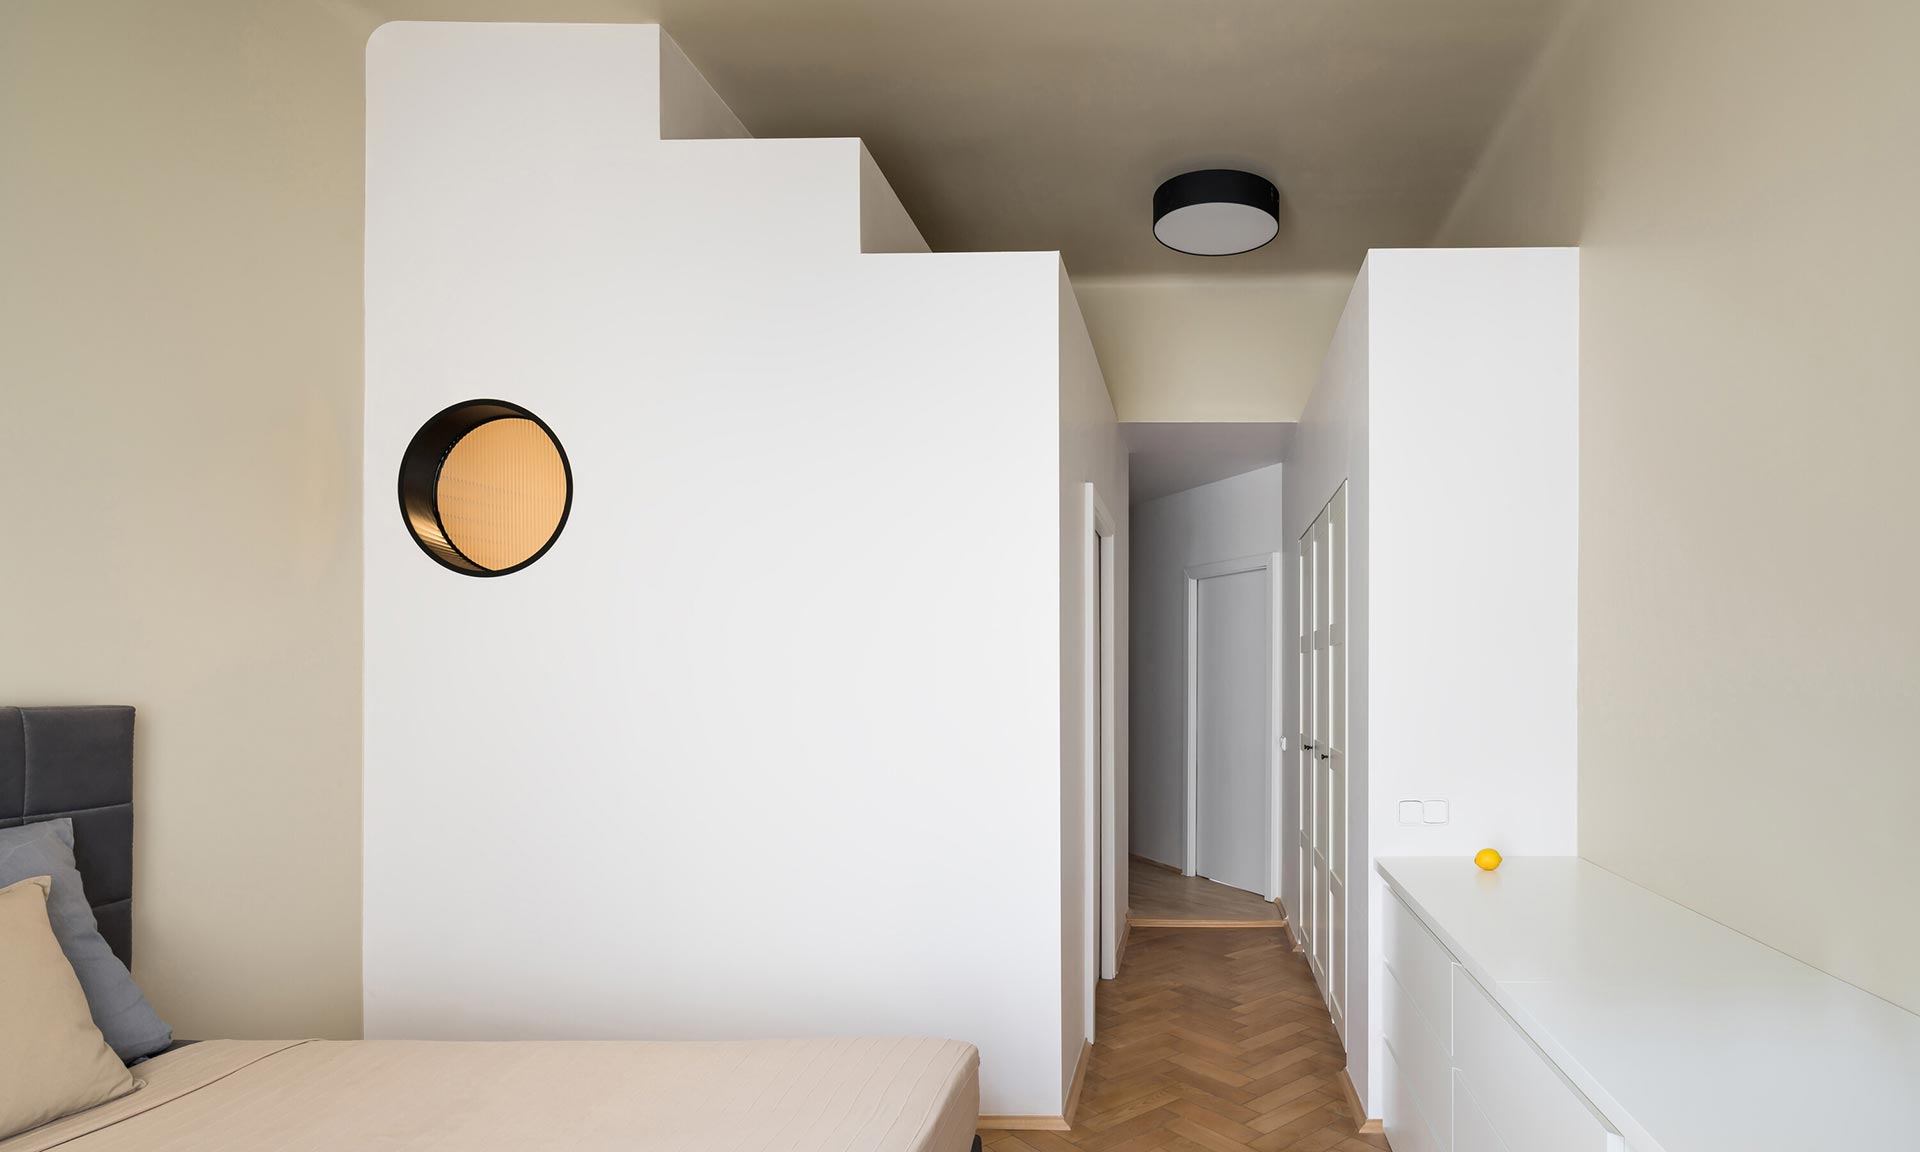 Pražský byt s vysokými stropy ozvláštnil italský designér stupňovitými objemy